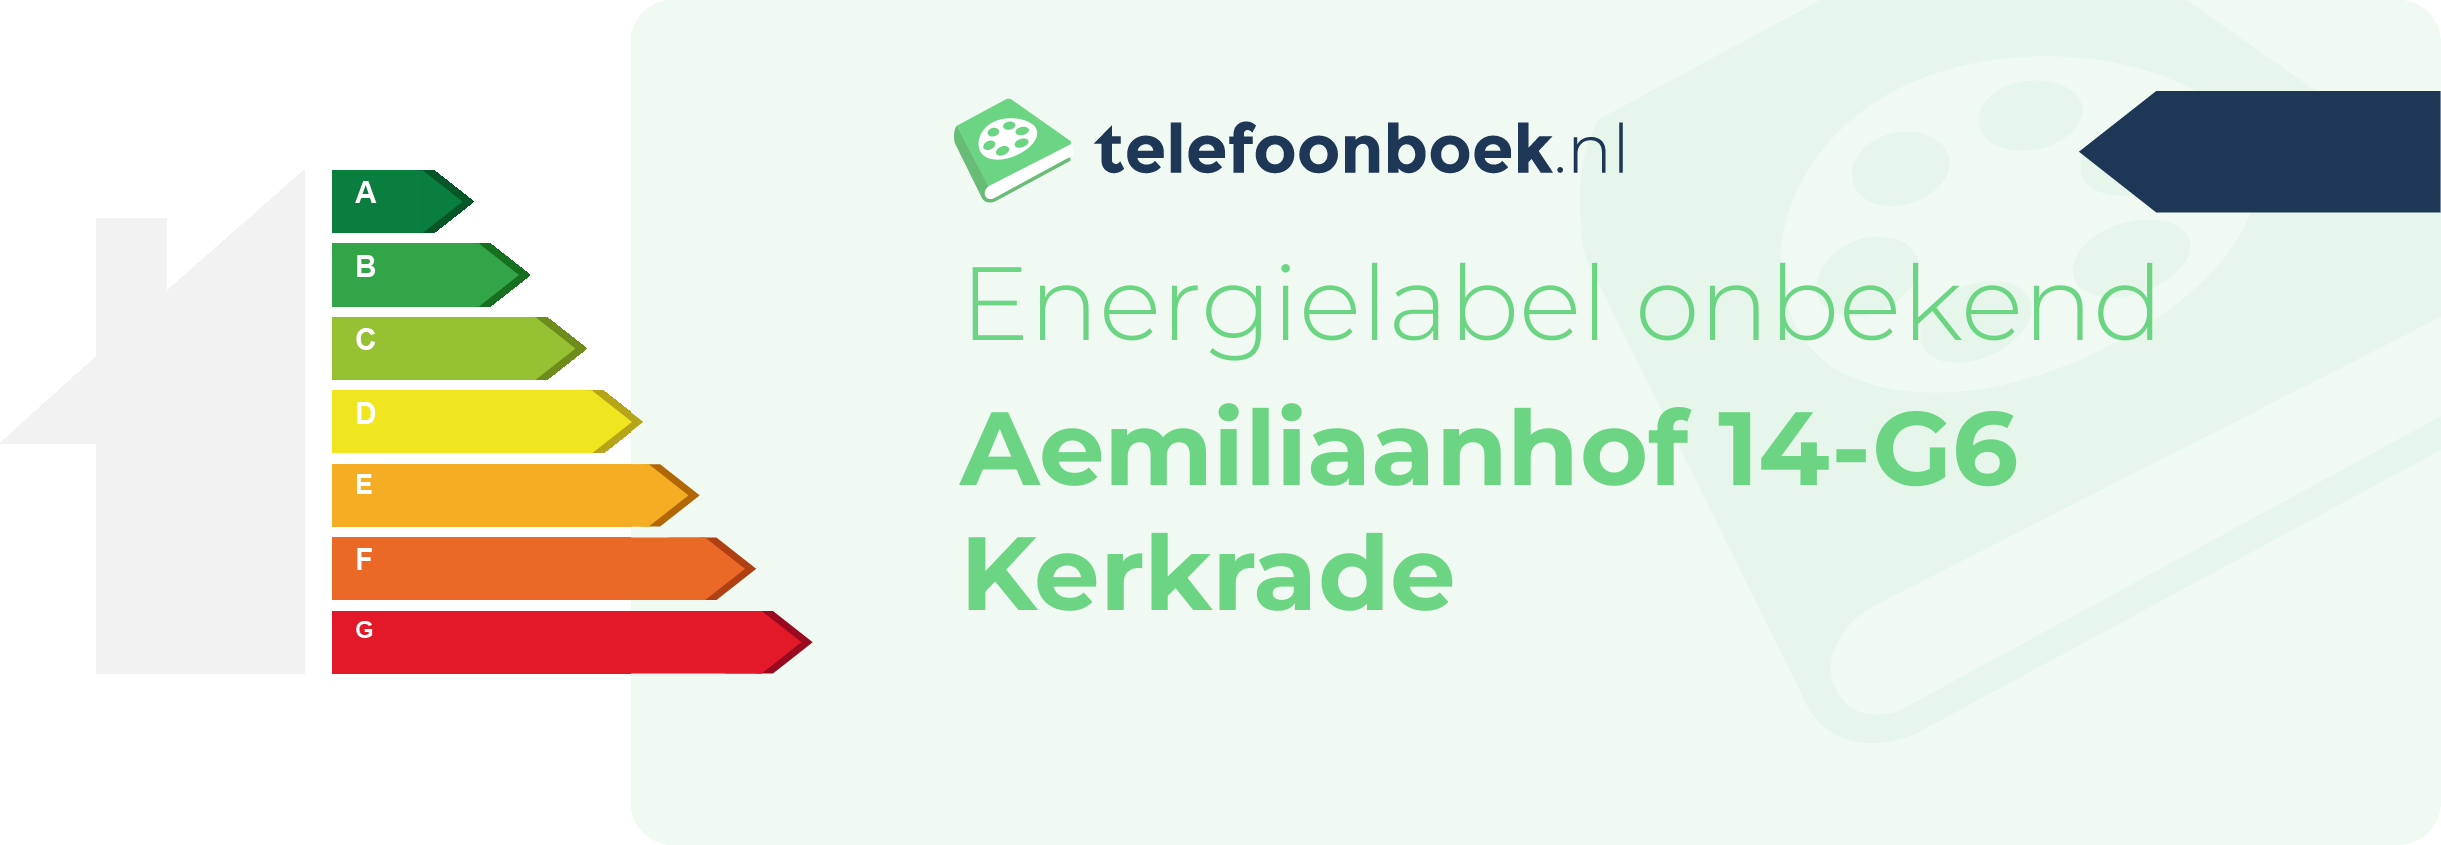 Energielabel Aemiliaanhof 14-G6 Kerkrade